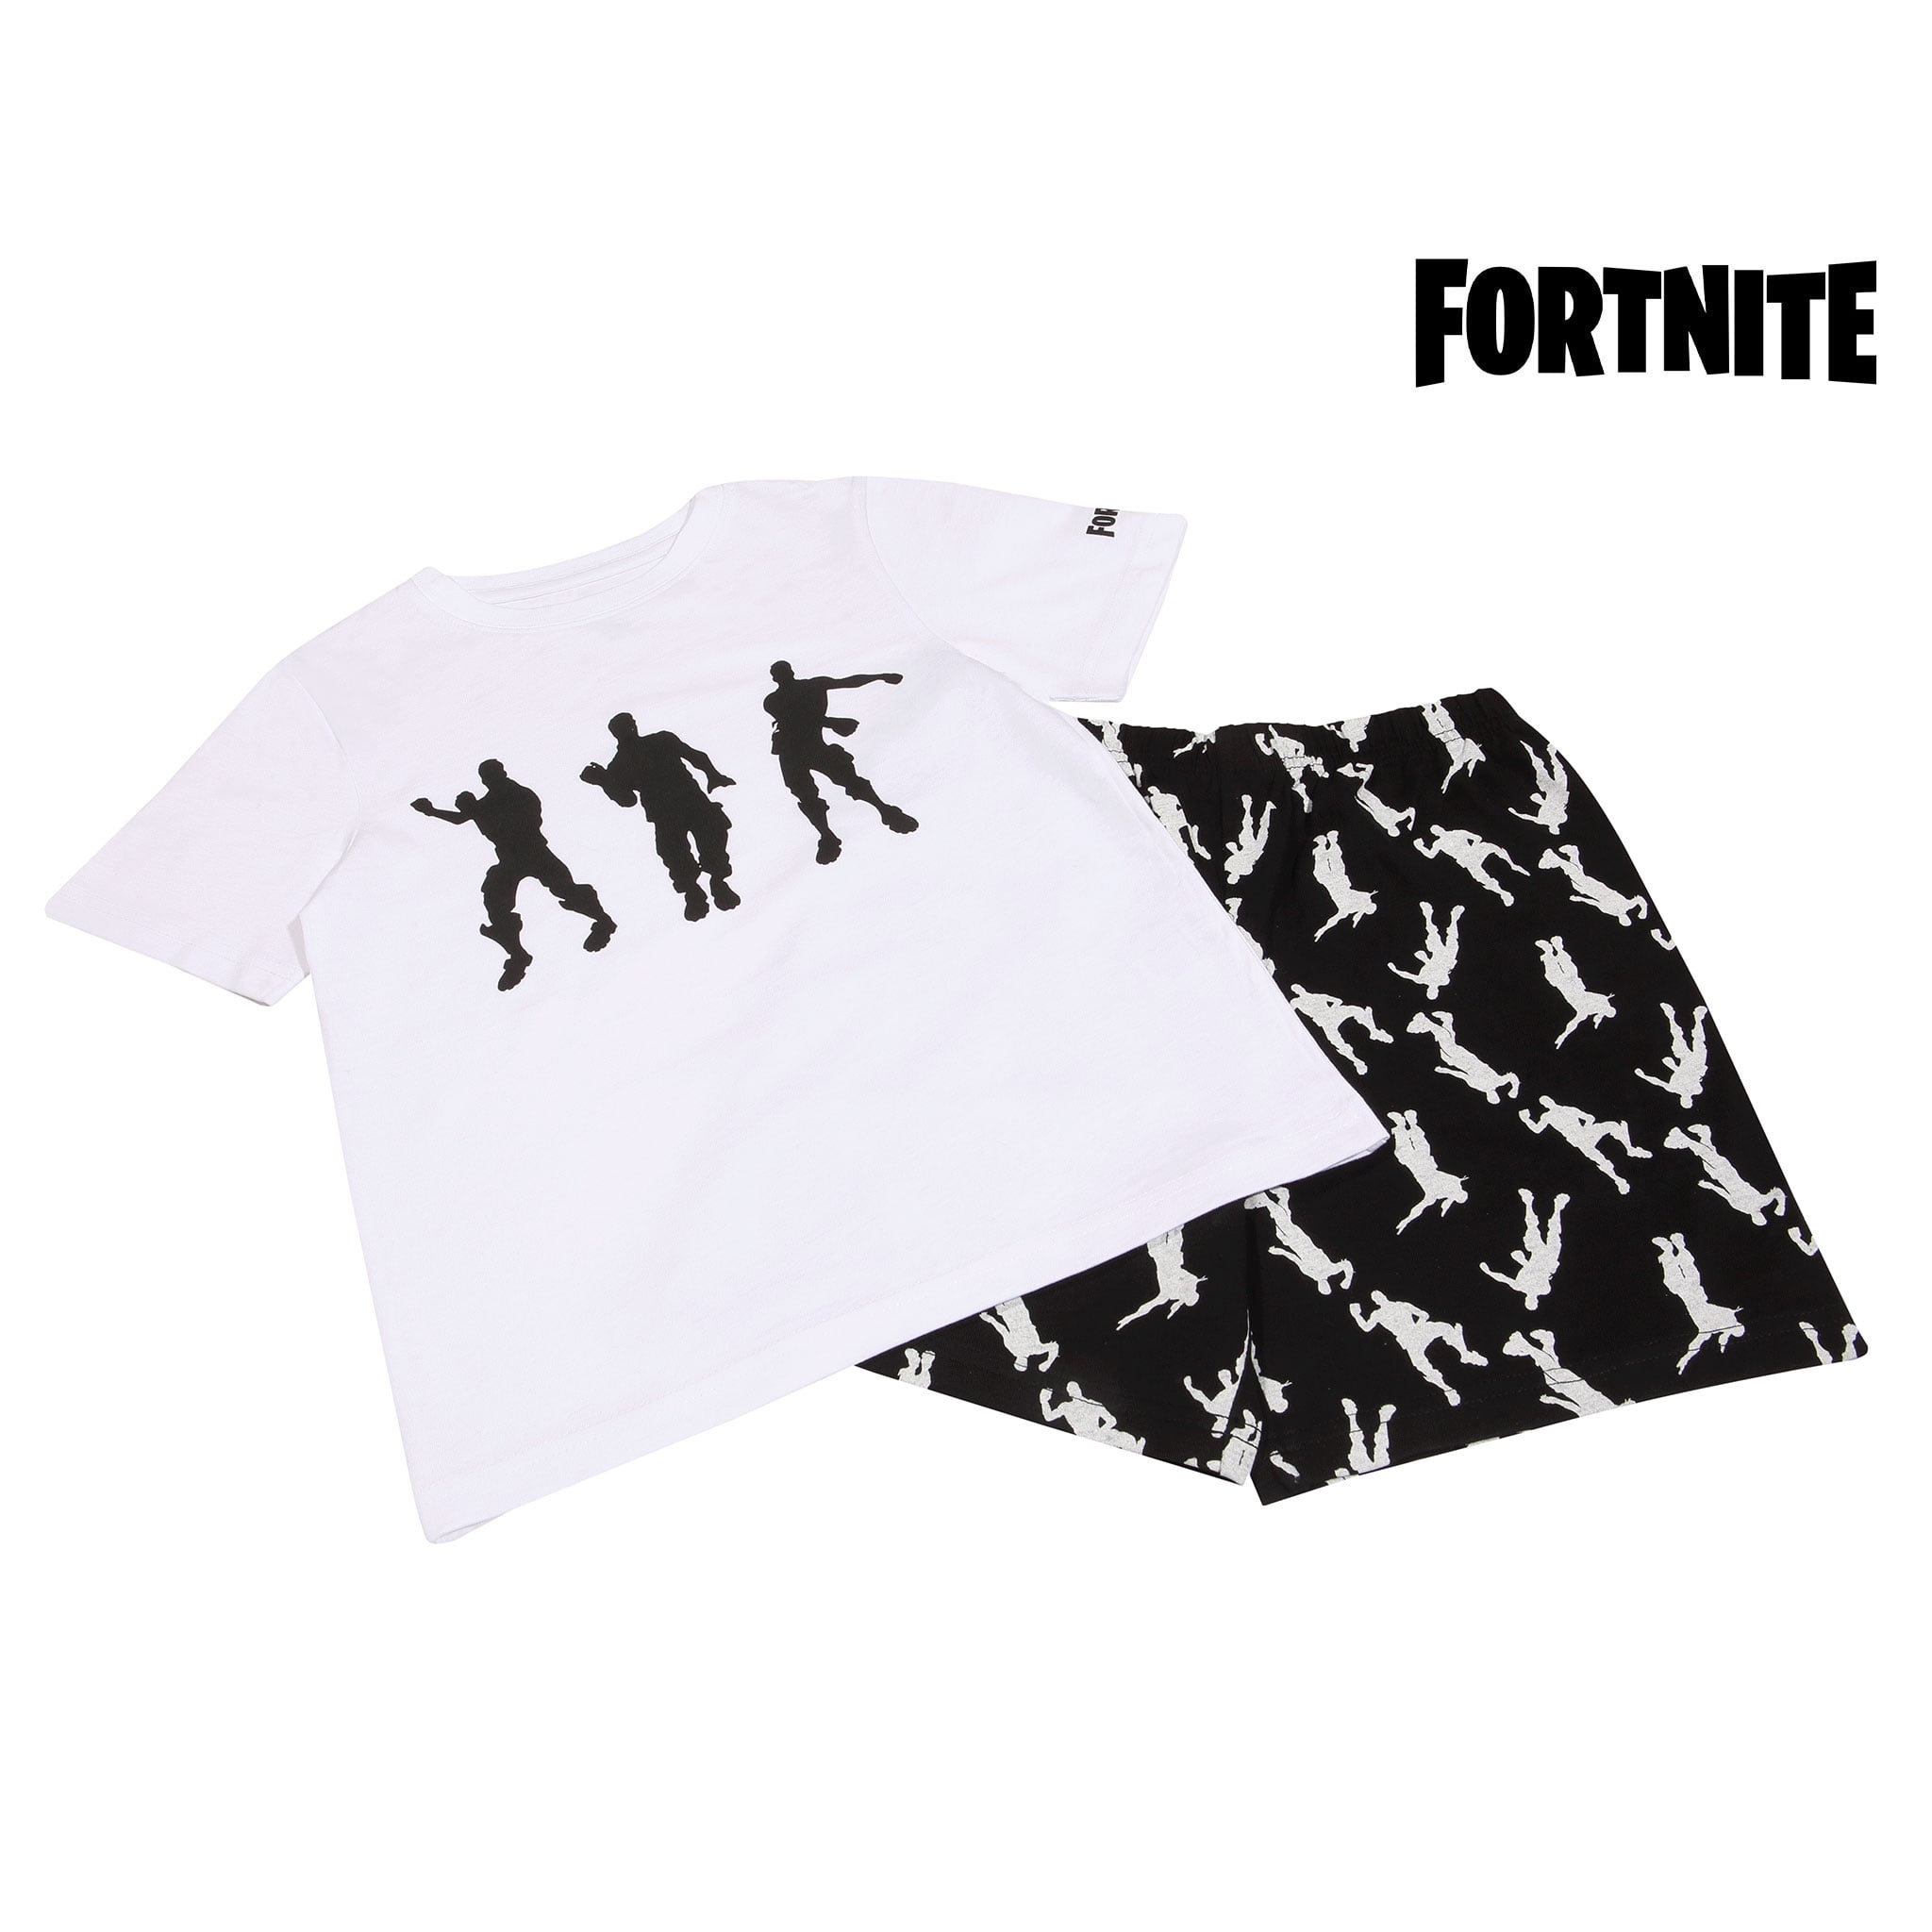 Fortnite Boy's Dancing Emotes Short Pyjamas Set White/Black Pajama 